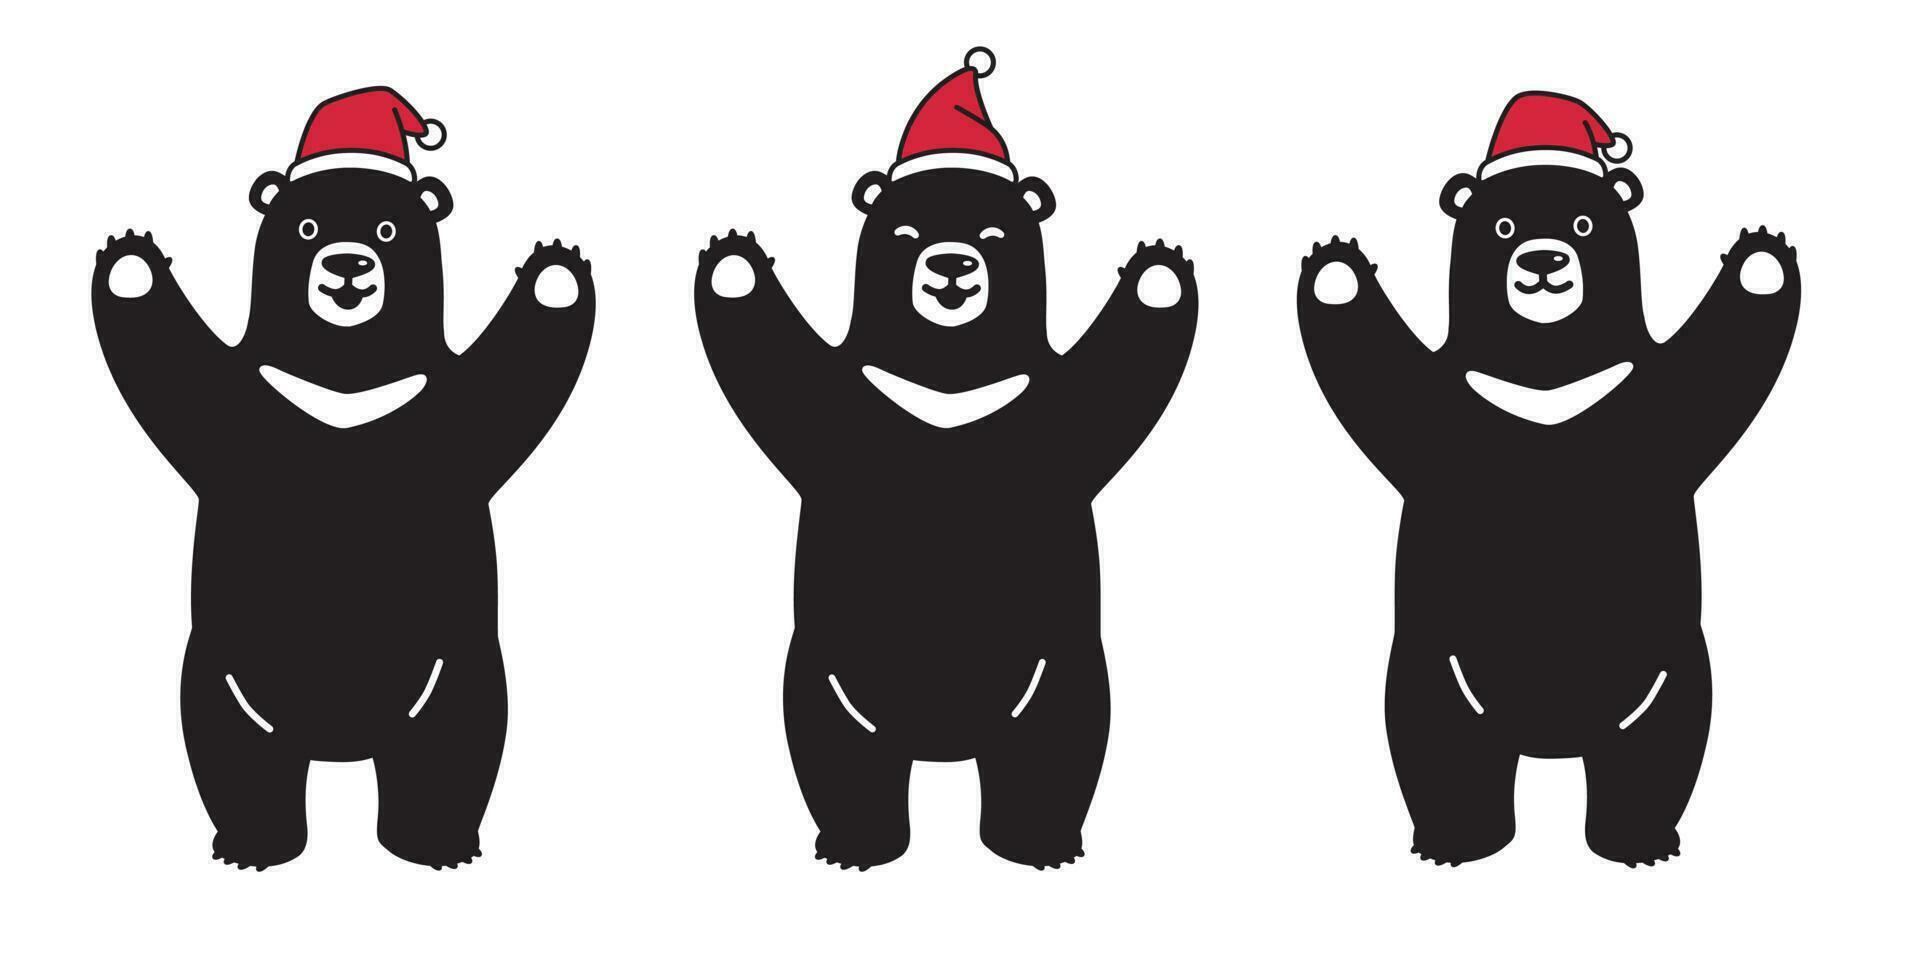 bear vector polar bear Christmas Santa Claus Xmas scarf cartoon character icon logo illustration symbol graphic black